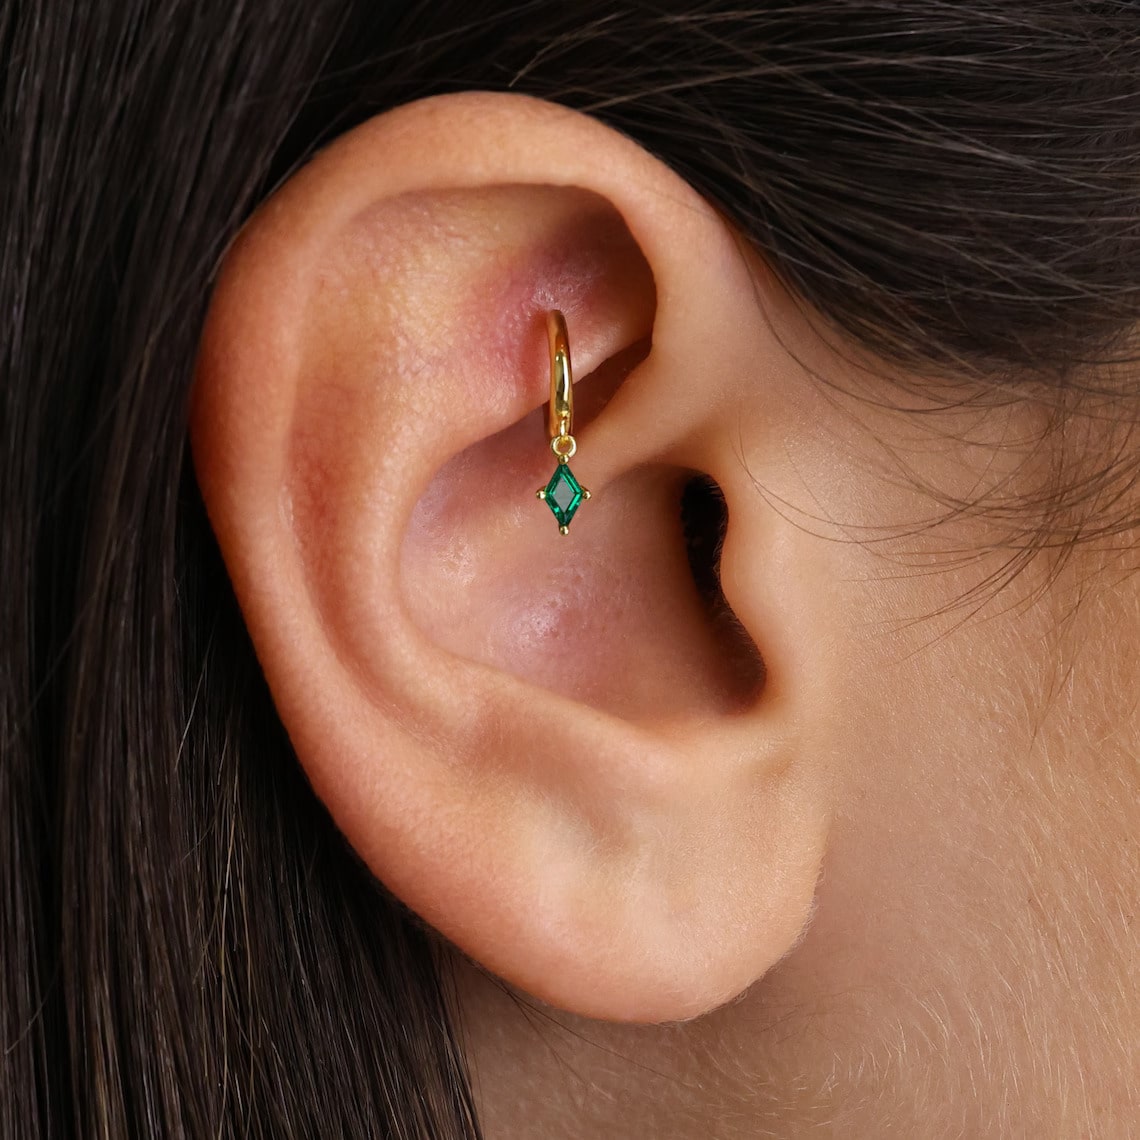 dangle hoop earring for rook piercing